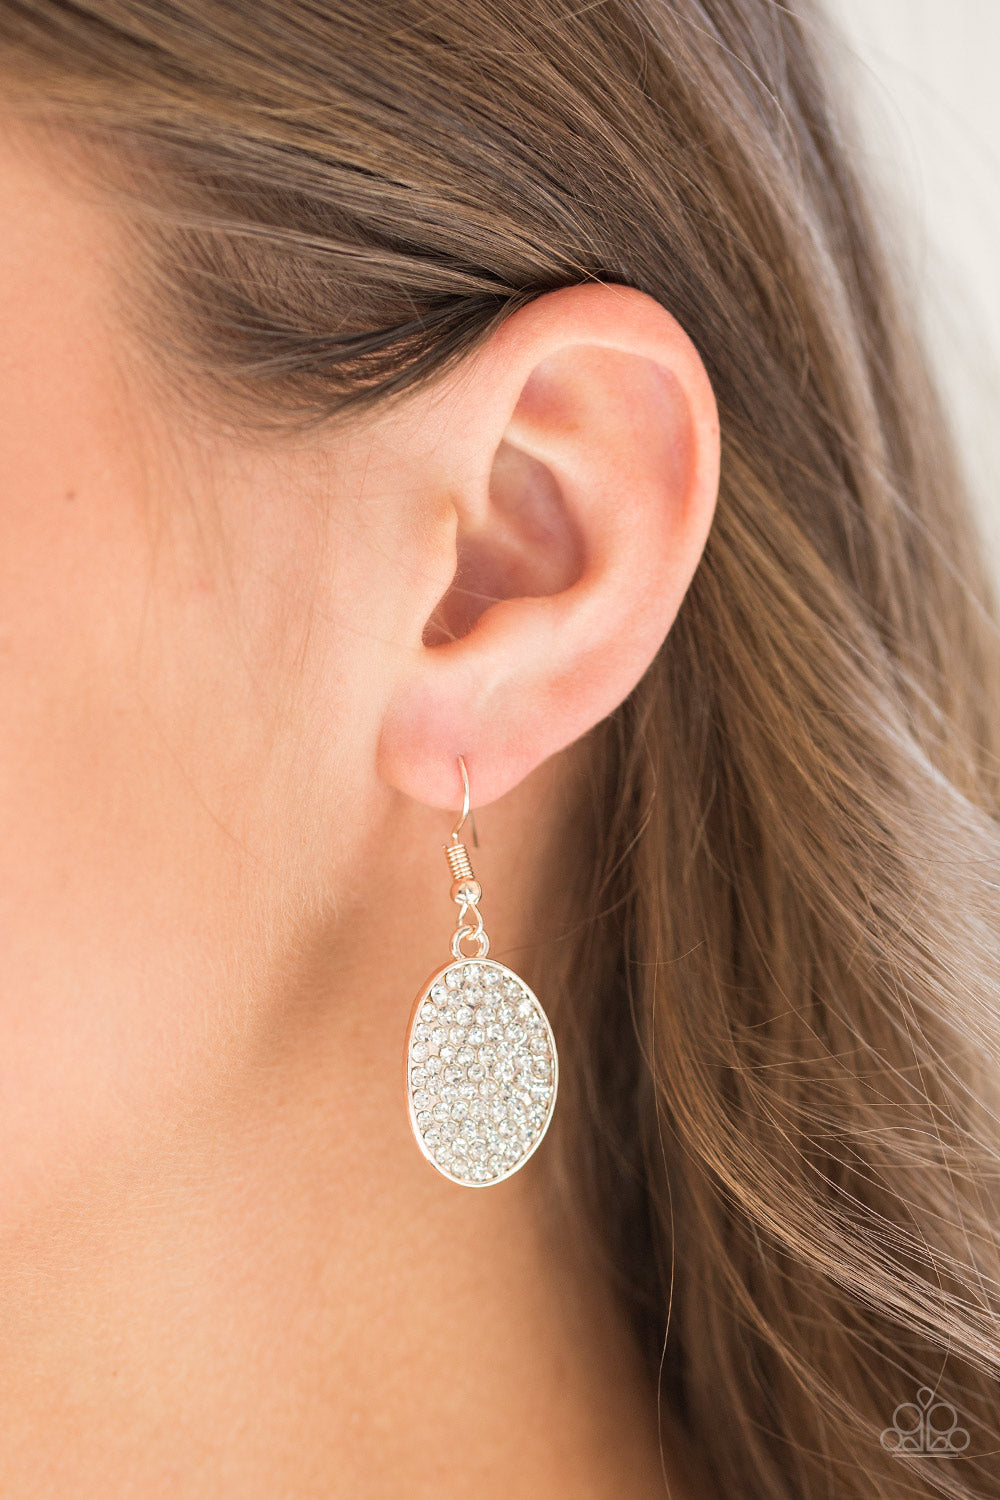 Paparazzi All Dazzle - Rose Gold - Rhinestone Earrings - $5 Jewelry With Ashley Swint